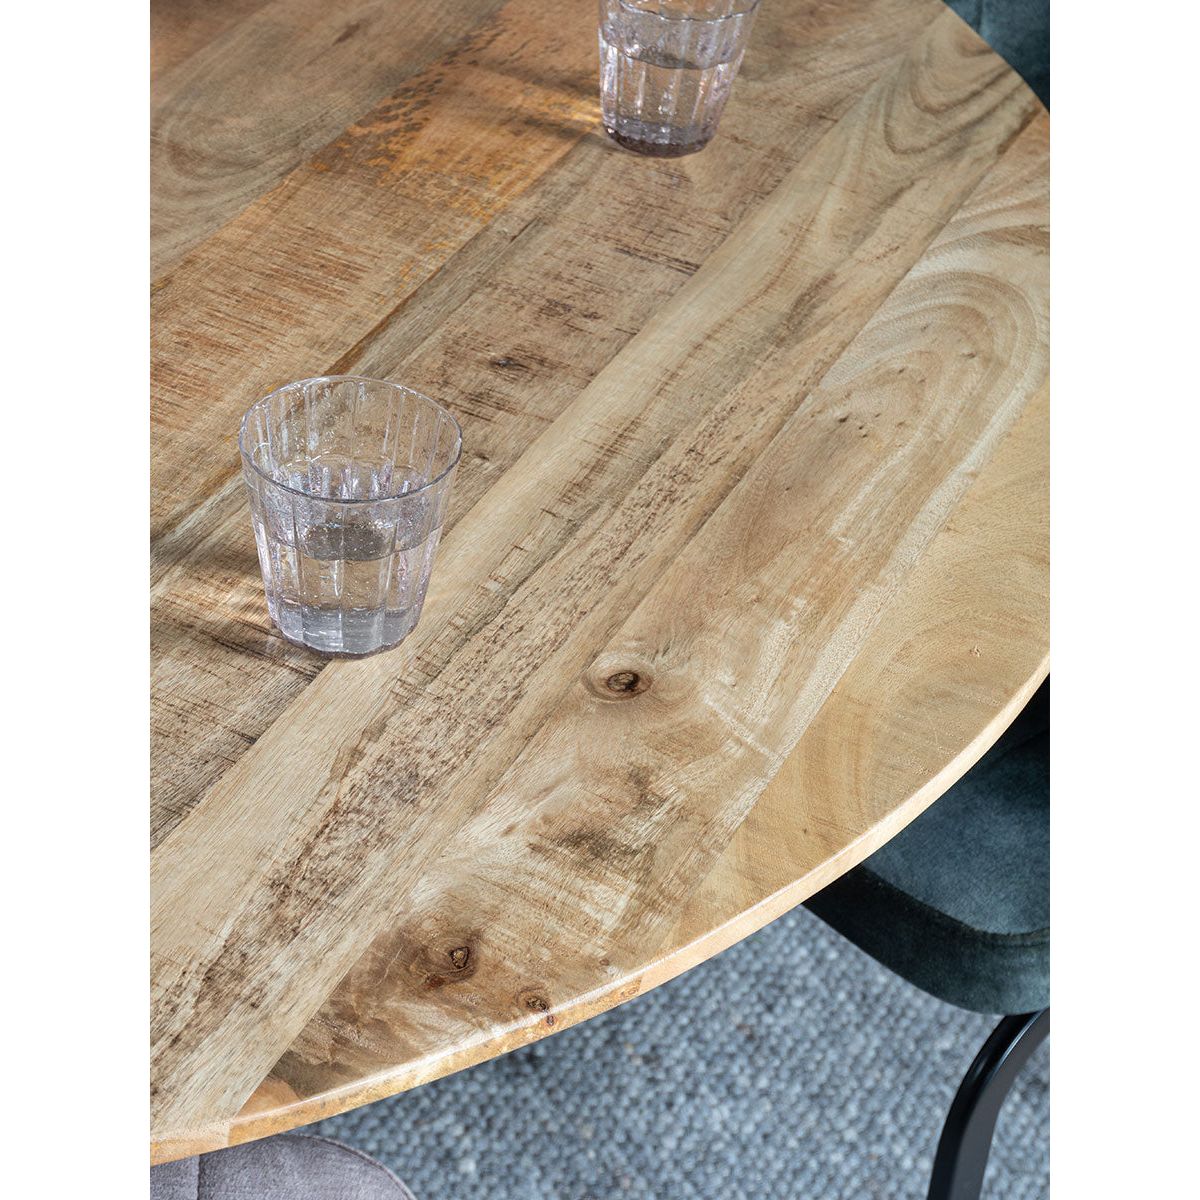 Dining table Icon - Mango wood Round